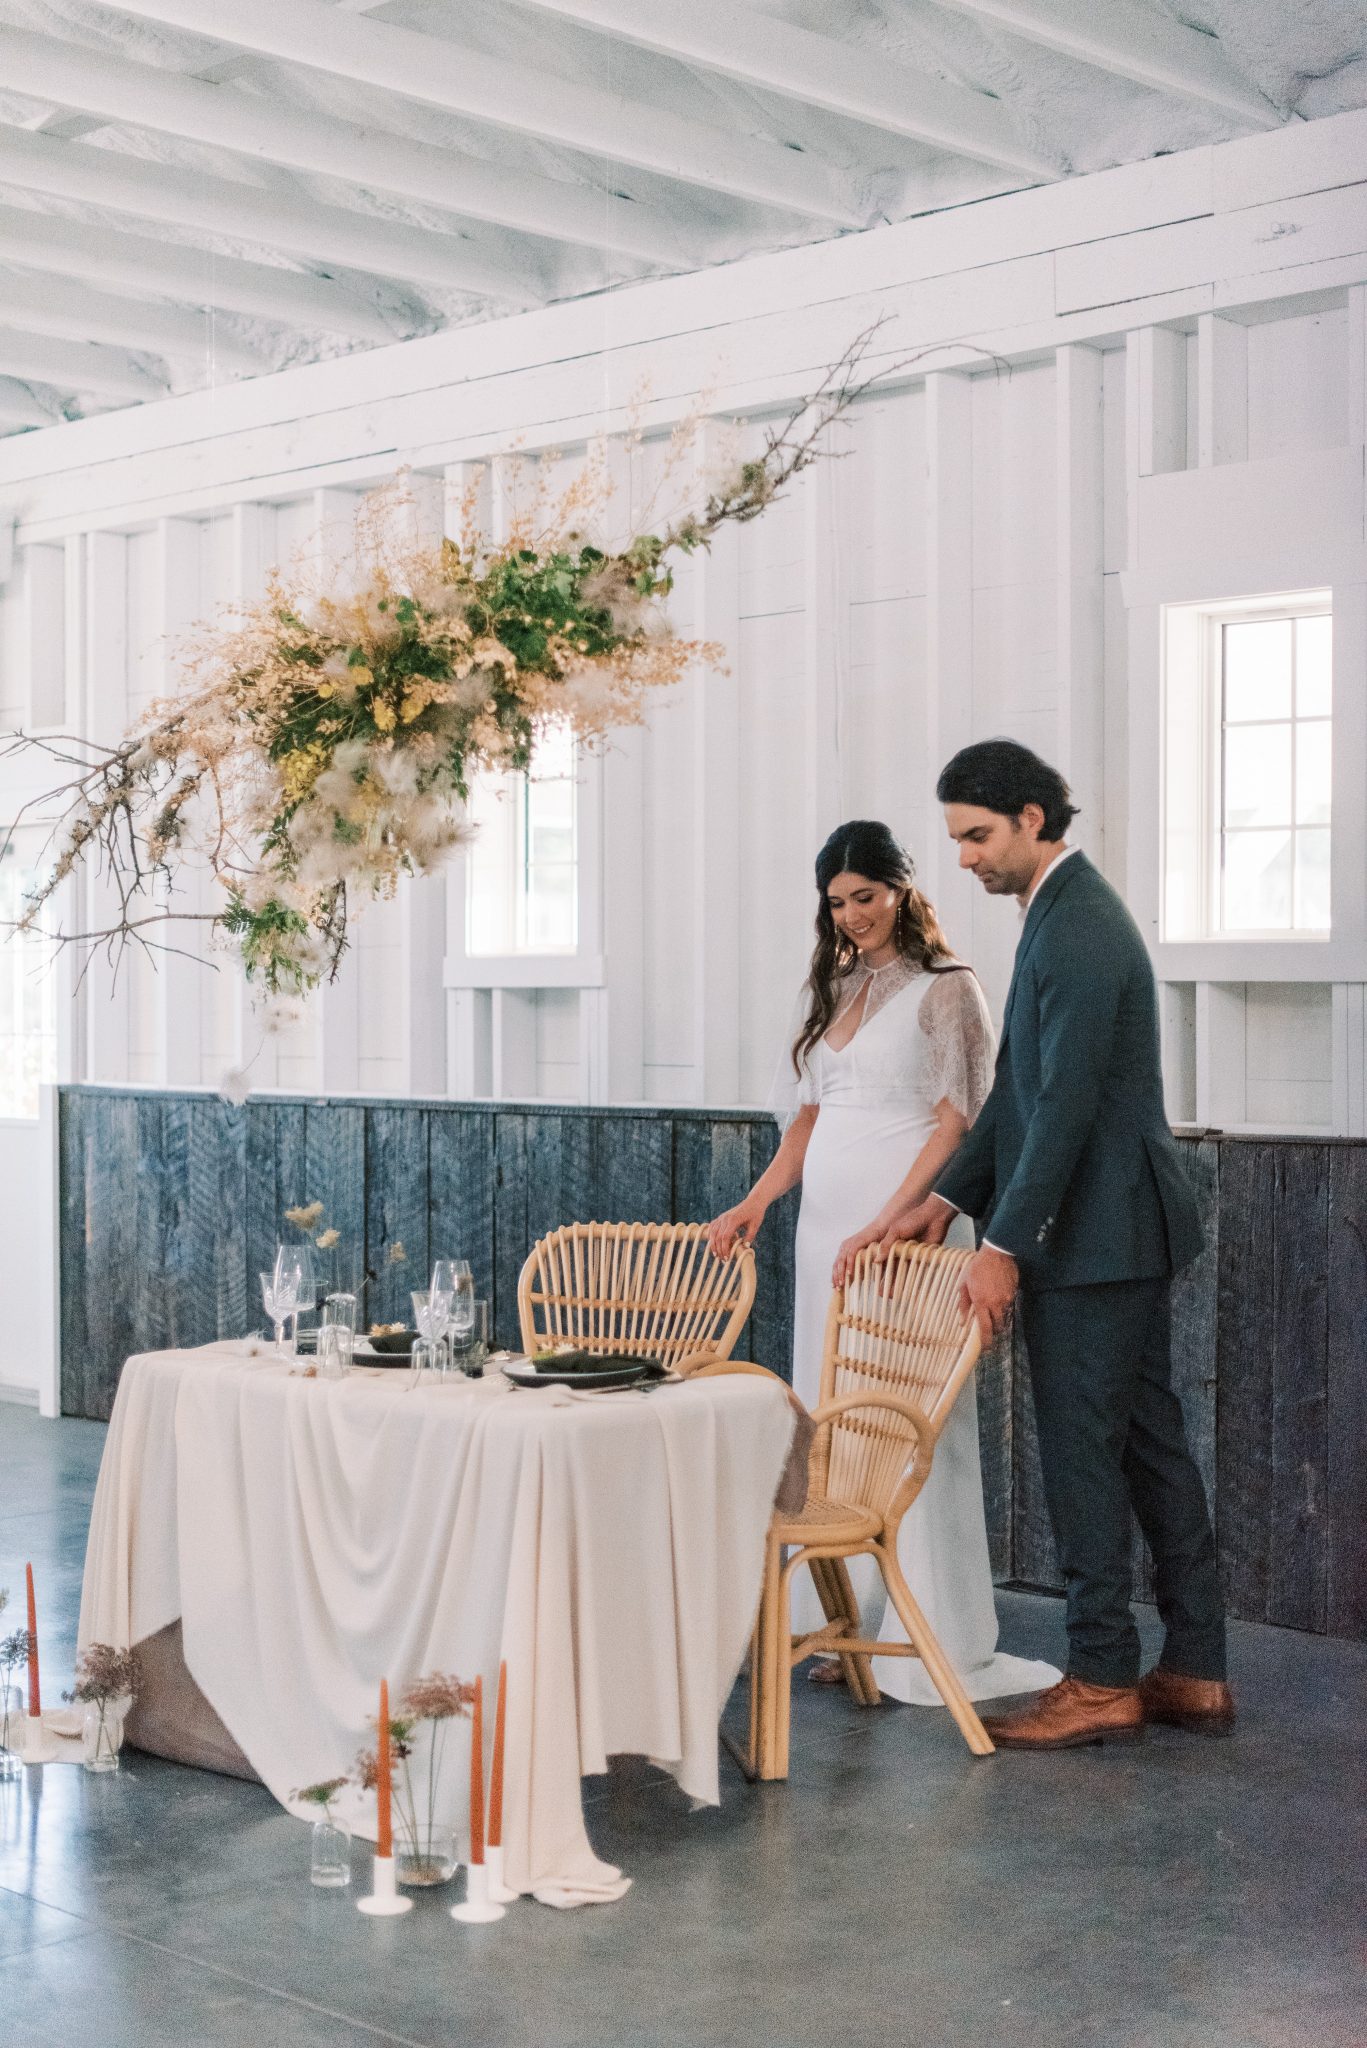 sweetheart table, reception decor, boho wedding